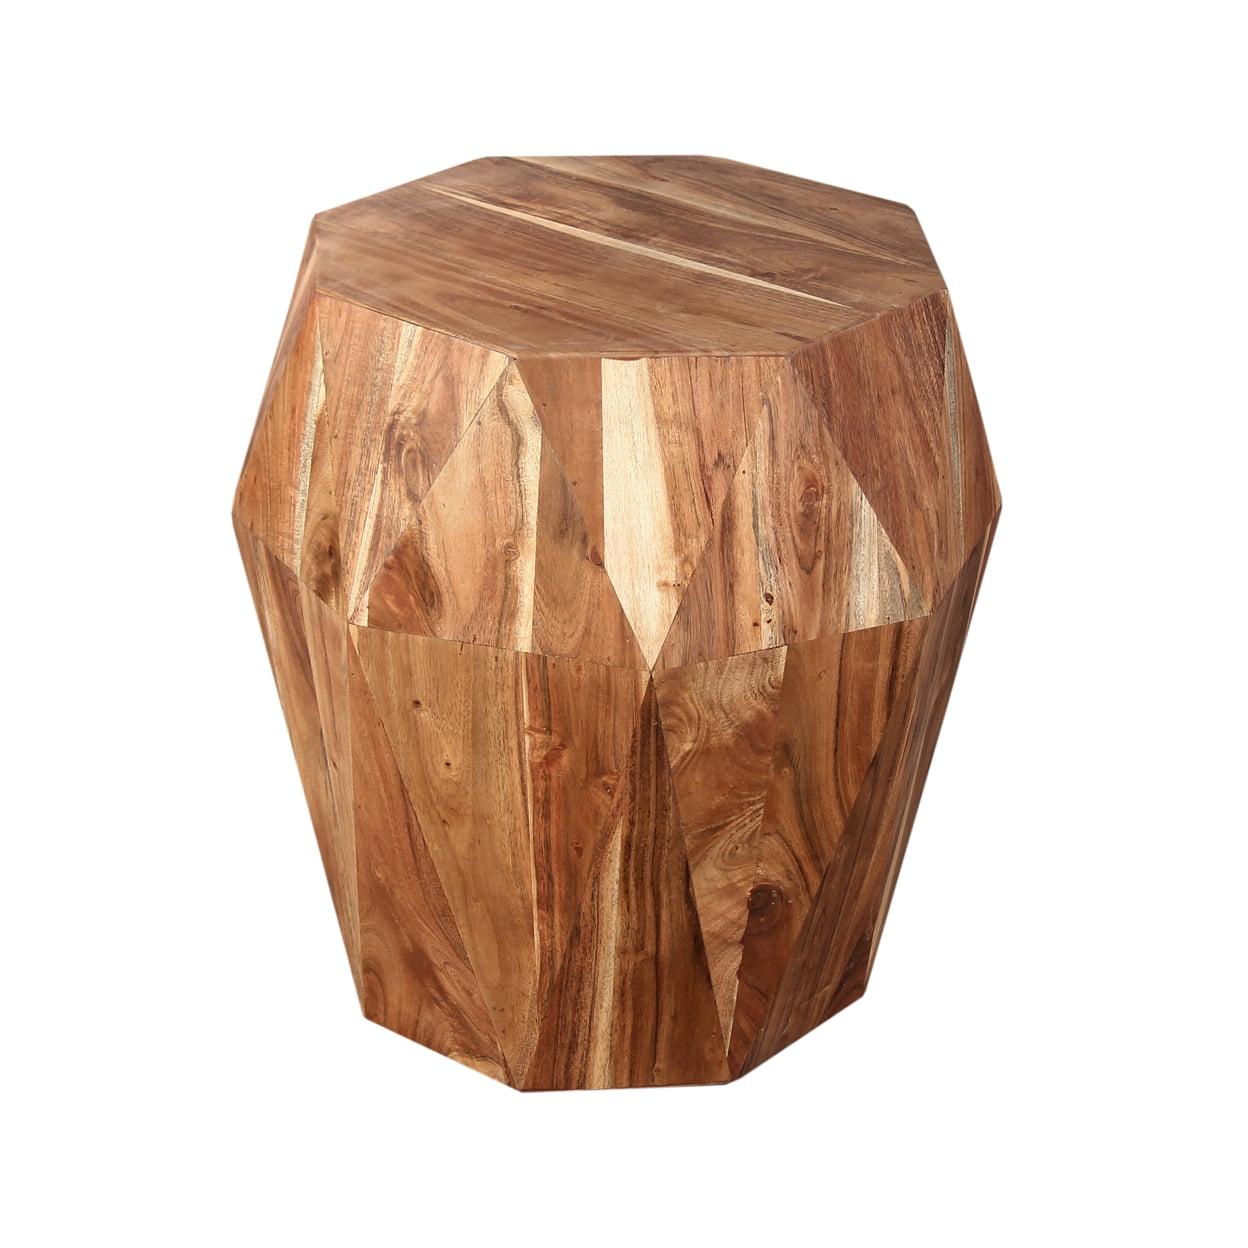 Artisanal Octagon Top Acacia Wood Side Table, Natural Brown